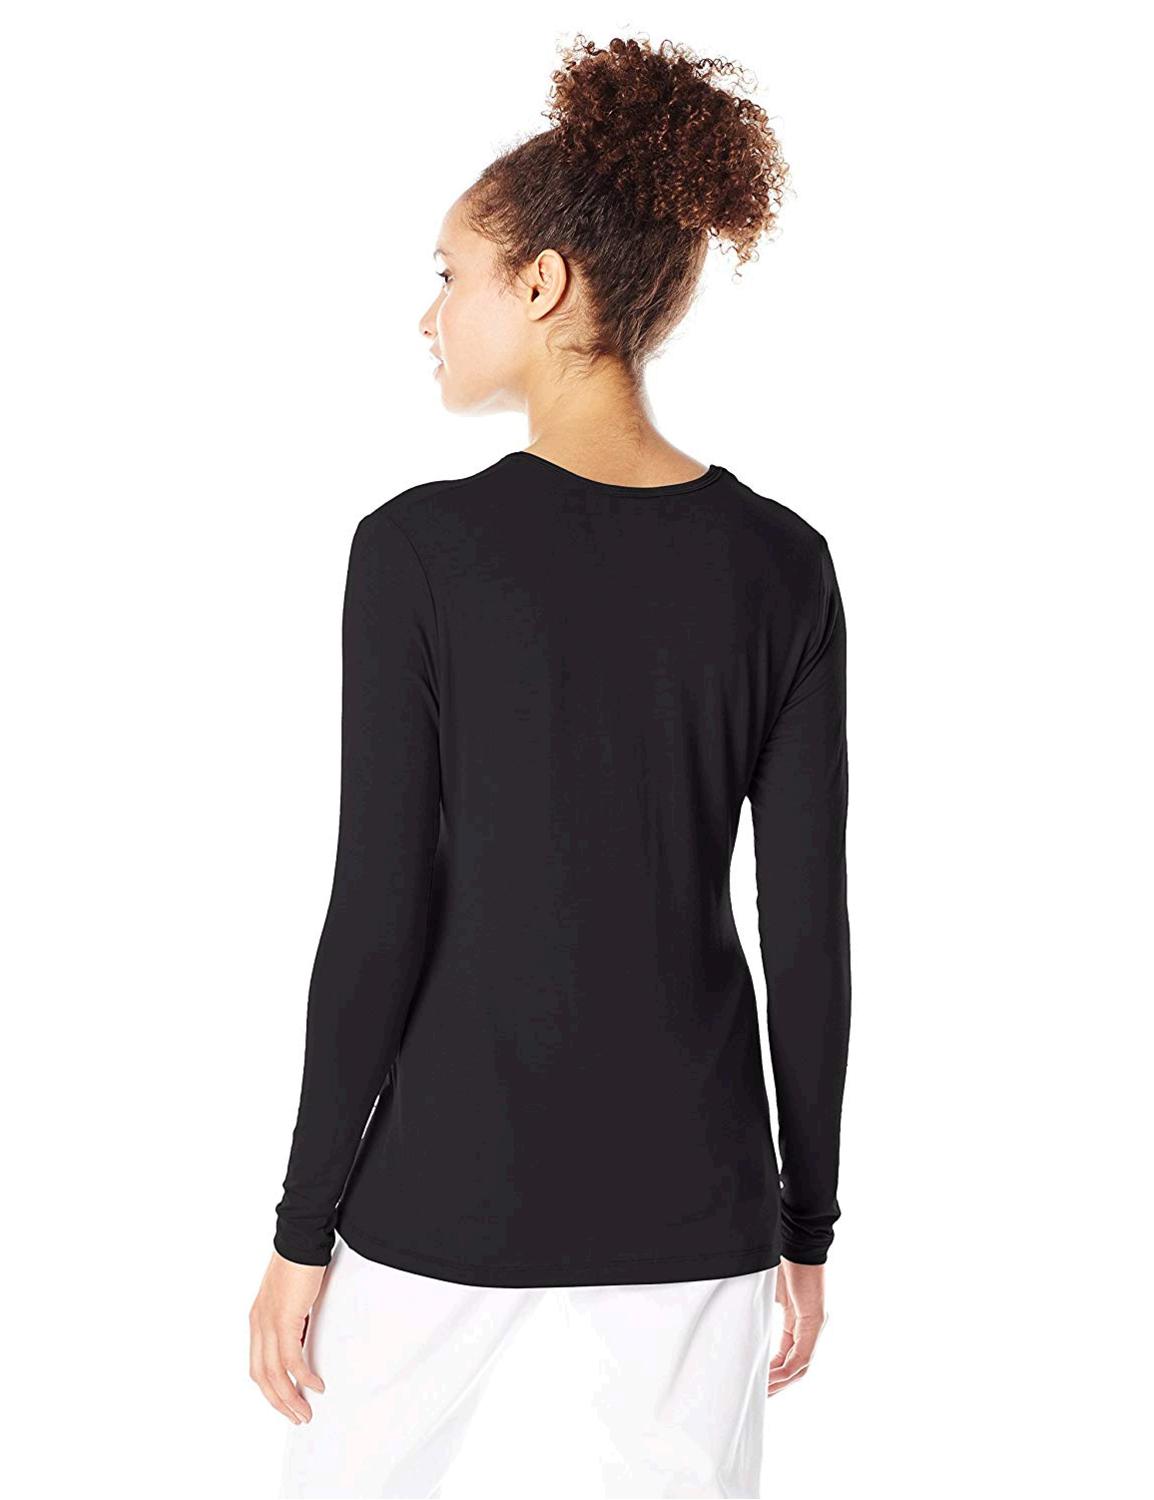 Cherokee Women's Long Sleeve Knit Shirt, Black, Large, Black, Size ...